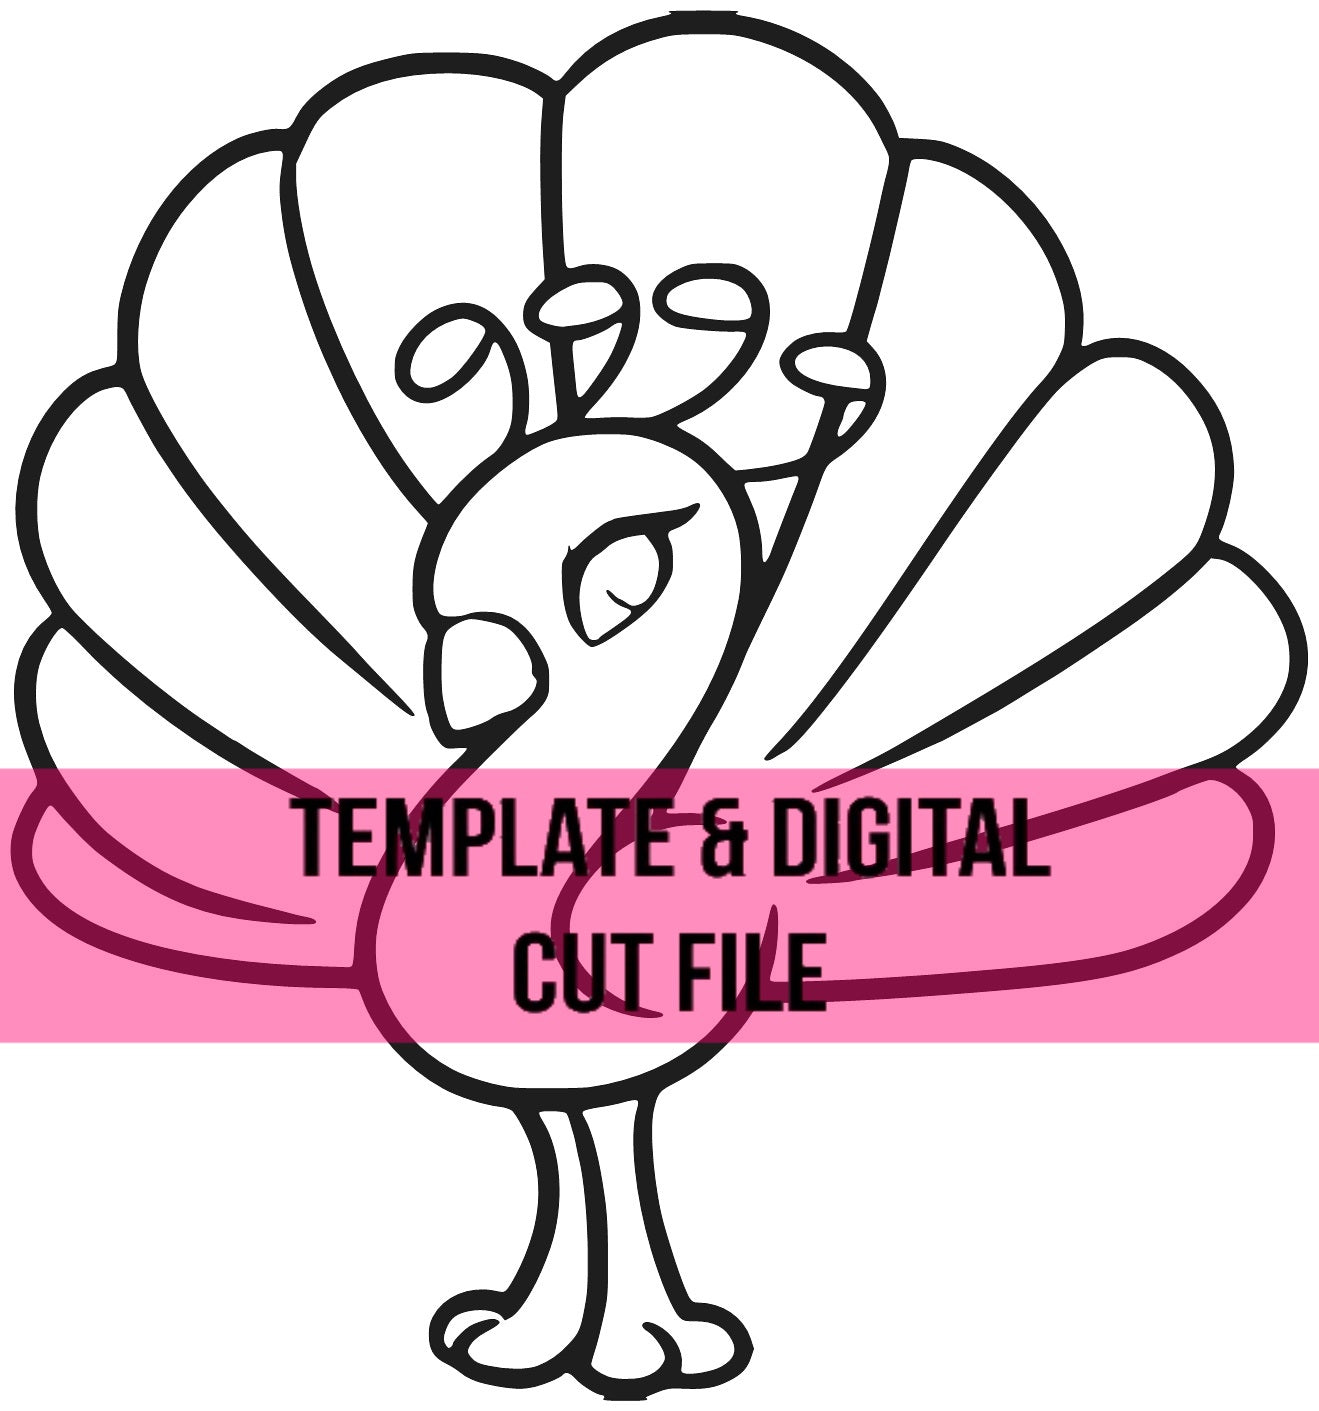 Peacock Template & Digital Cut File